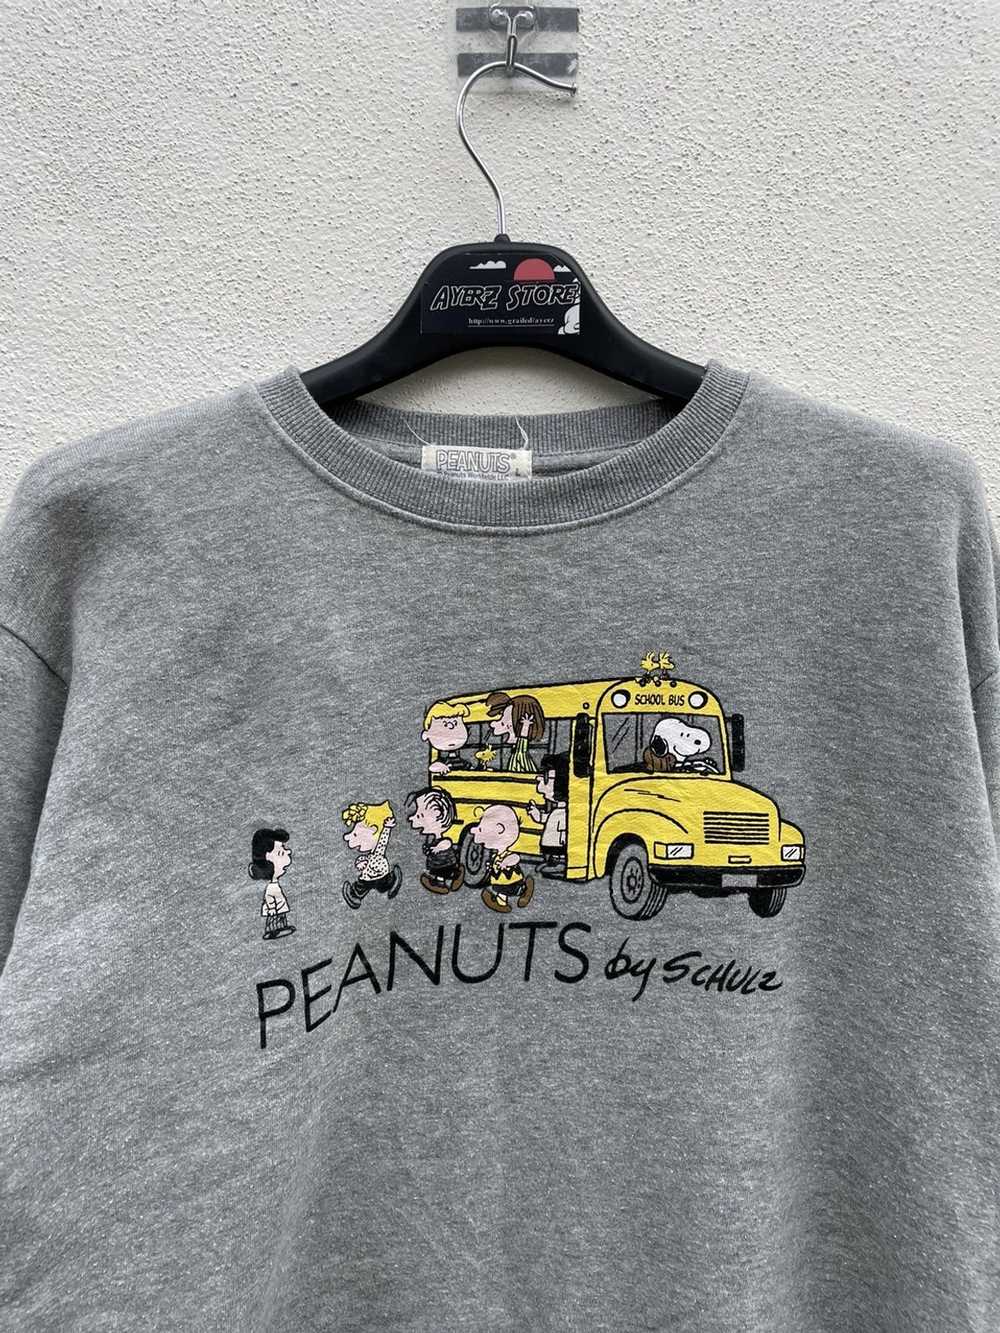 Peanuts Peanuts by Schulz Sweatshirt - image 3